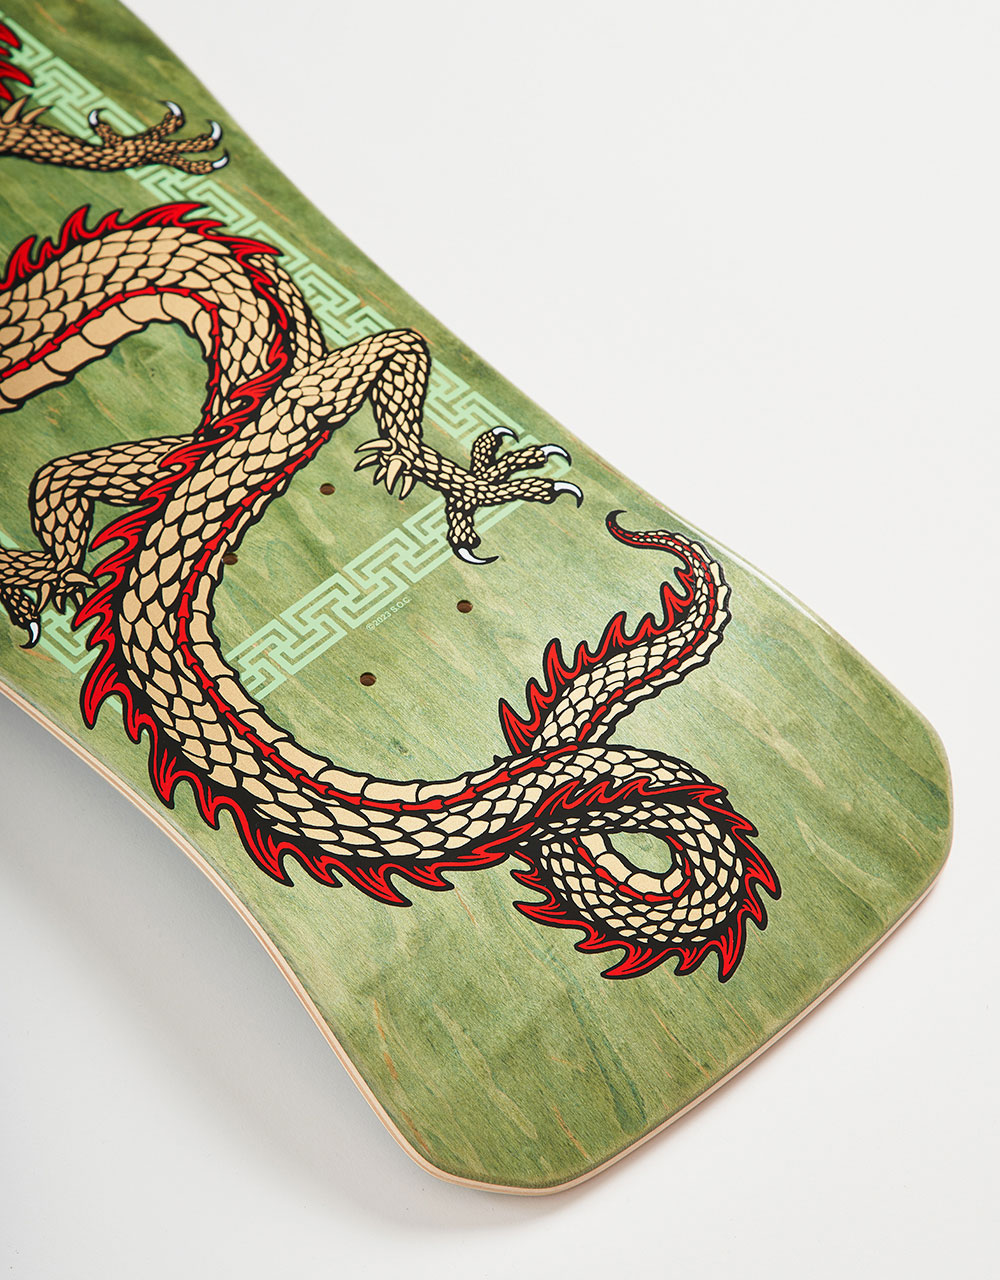 Powell Peralta Caballero Chinese Dragon '21' Skateboard Deck - 10"